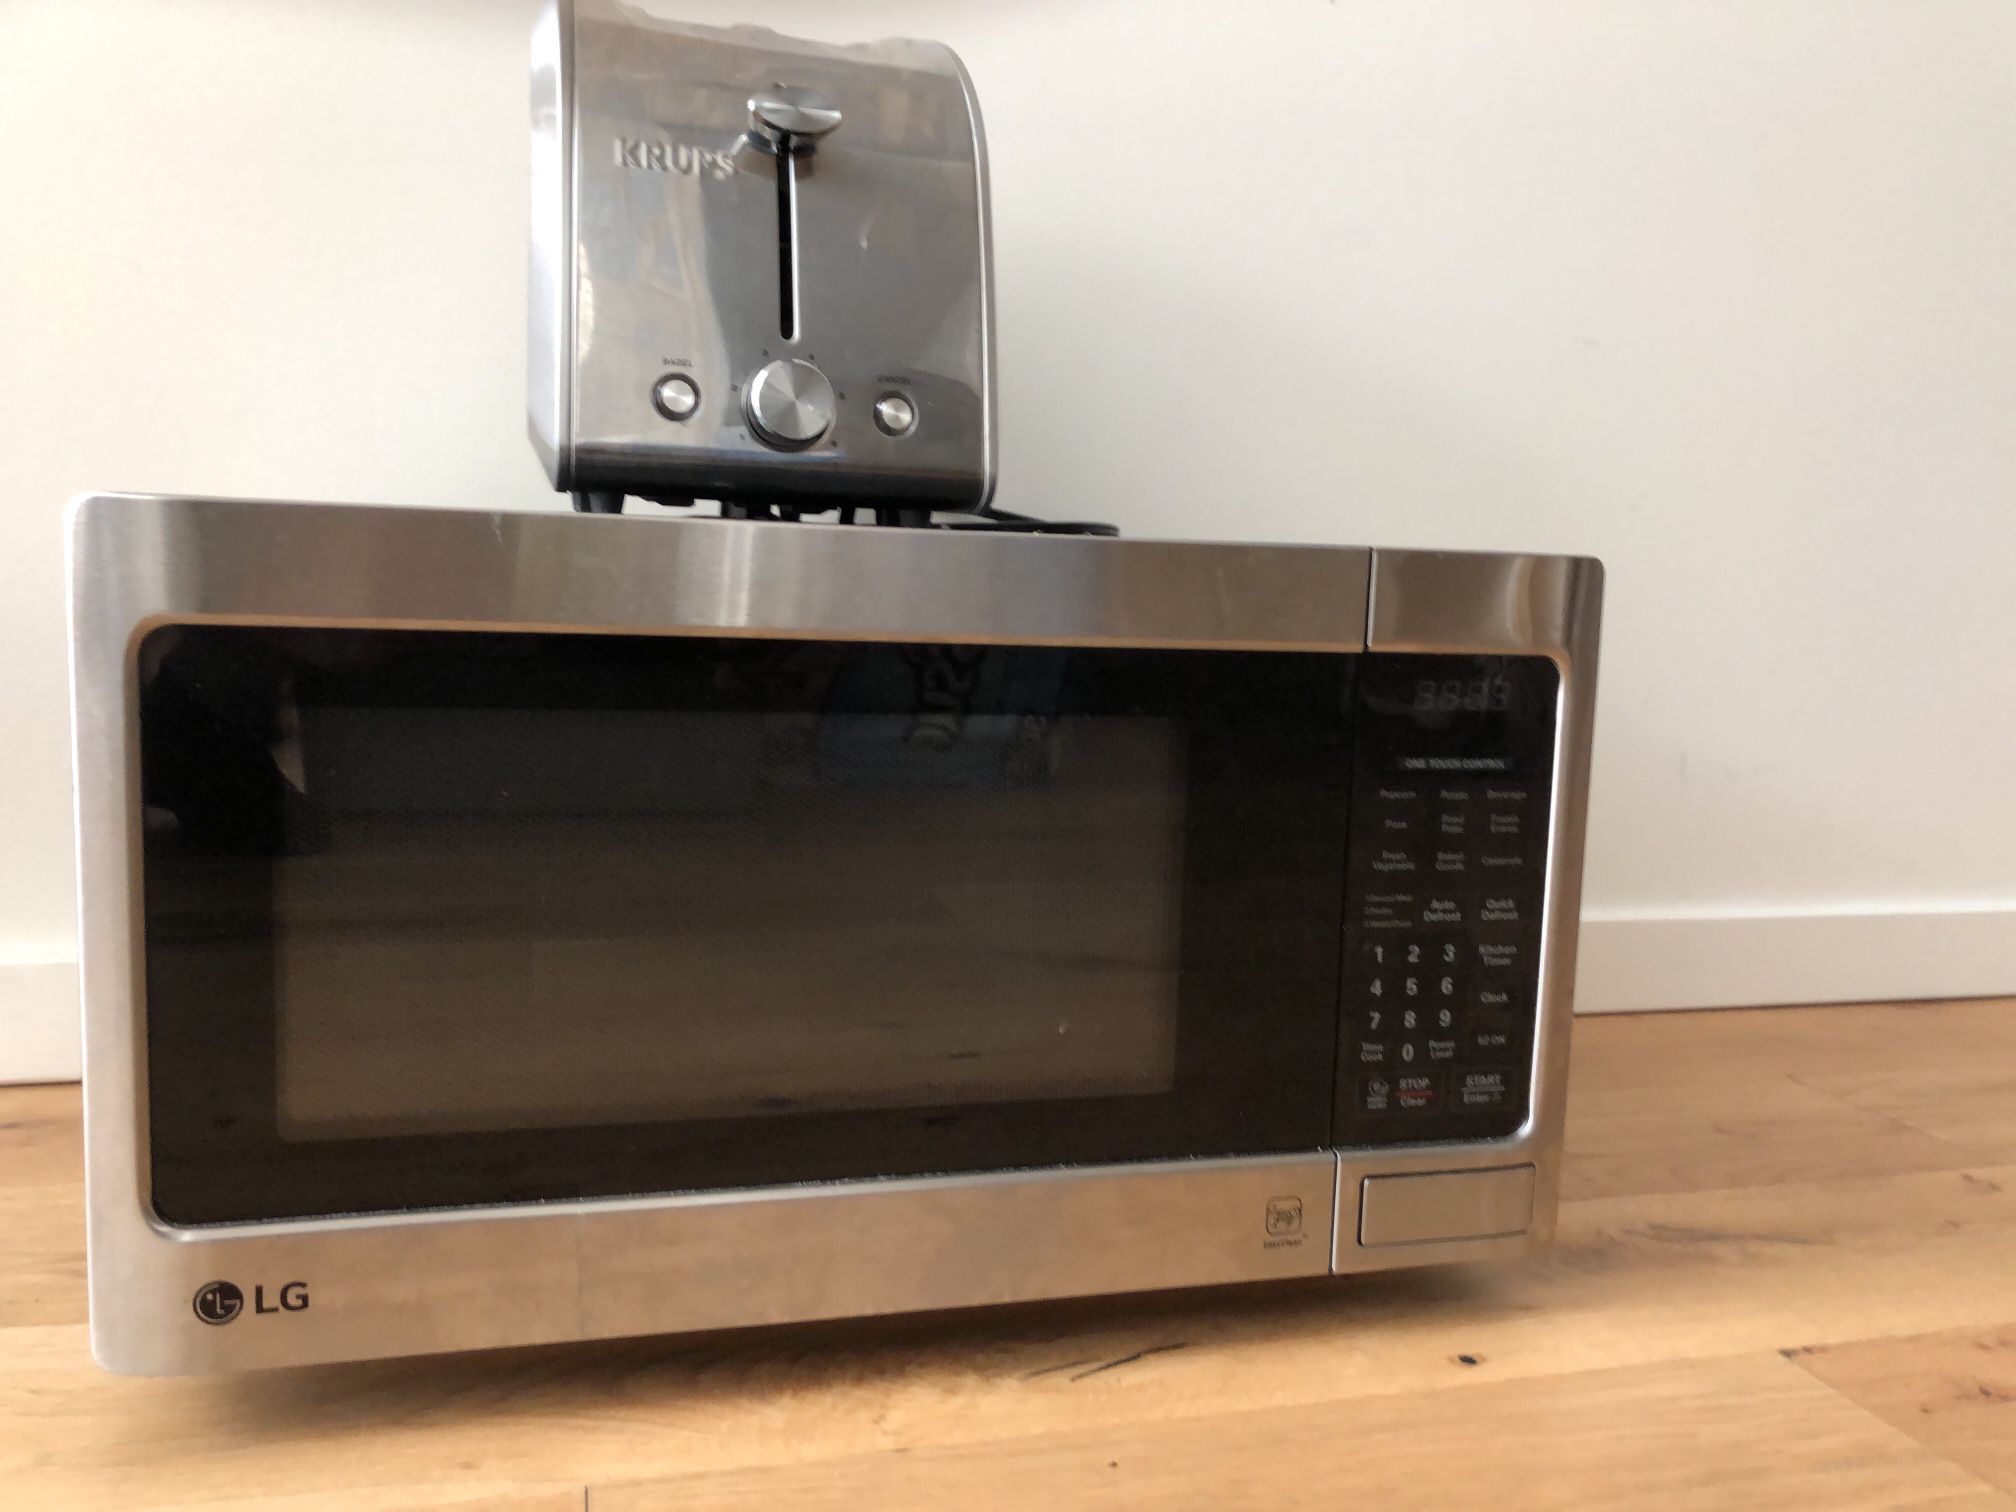 LG Microwave W/ Toaster